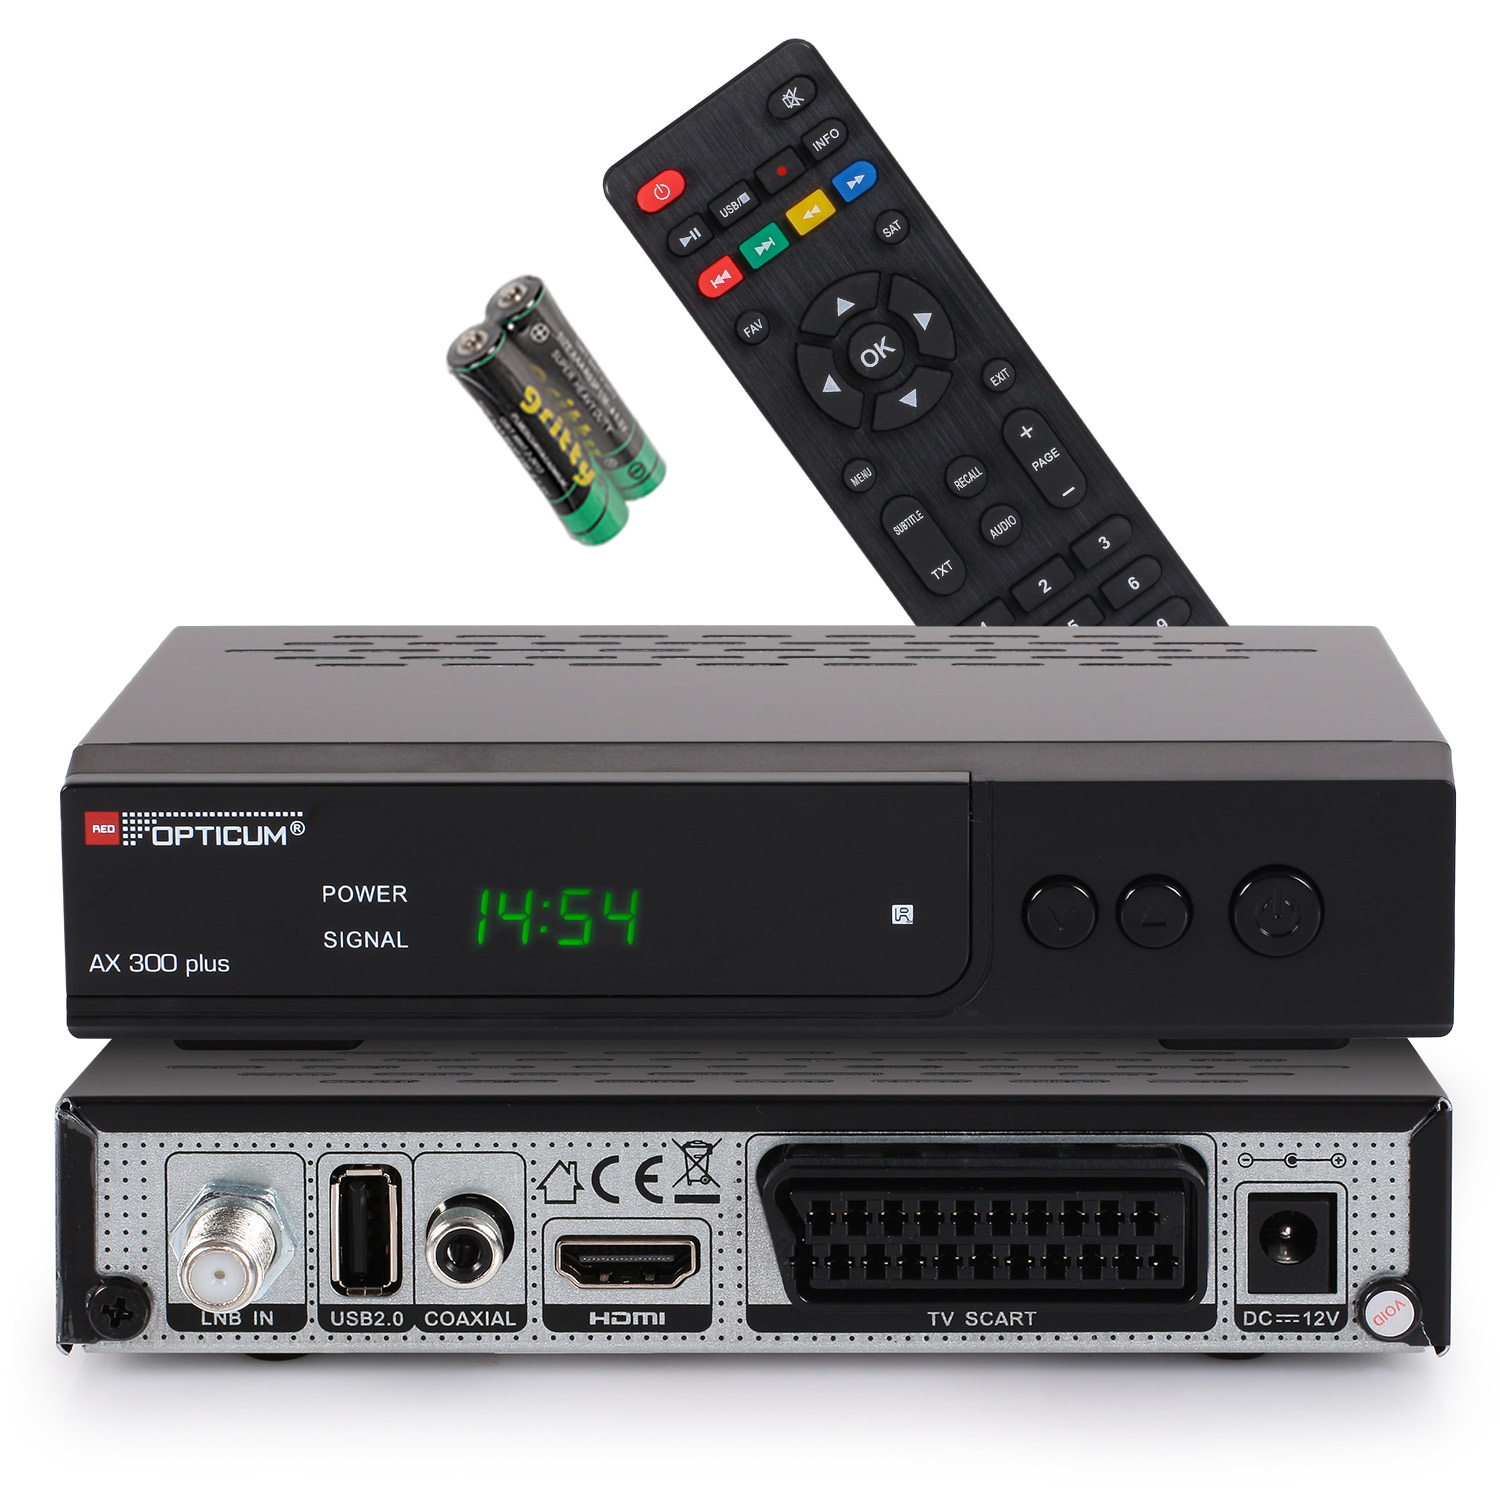 RED OPTICUM AX schwarz) DVB-S DVB-S2, 300 1080p Satelliten-Receiver Receiver Receiver Sat PVR Plus PVR-Funktion, - DVB-S, Digitaler HD (HDTV, USB-schwarz mit I -HDMI-SCART HD